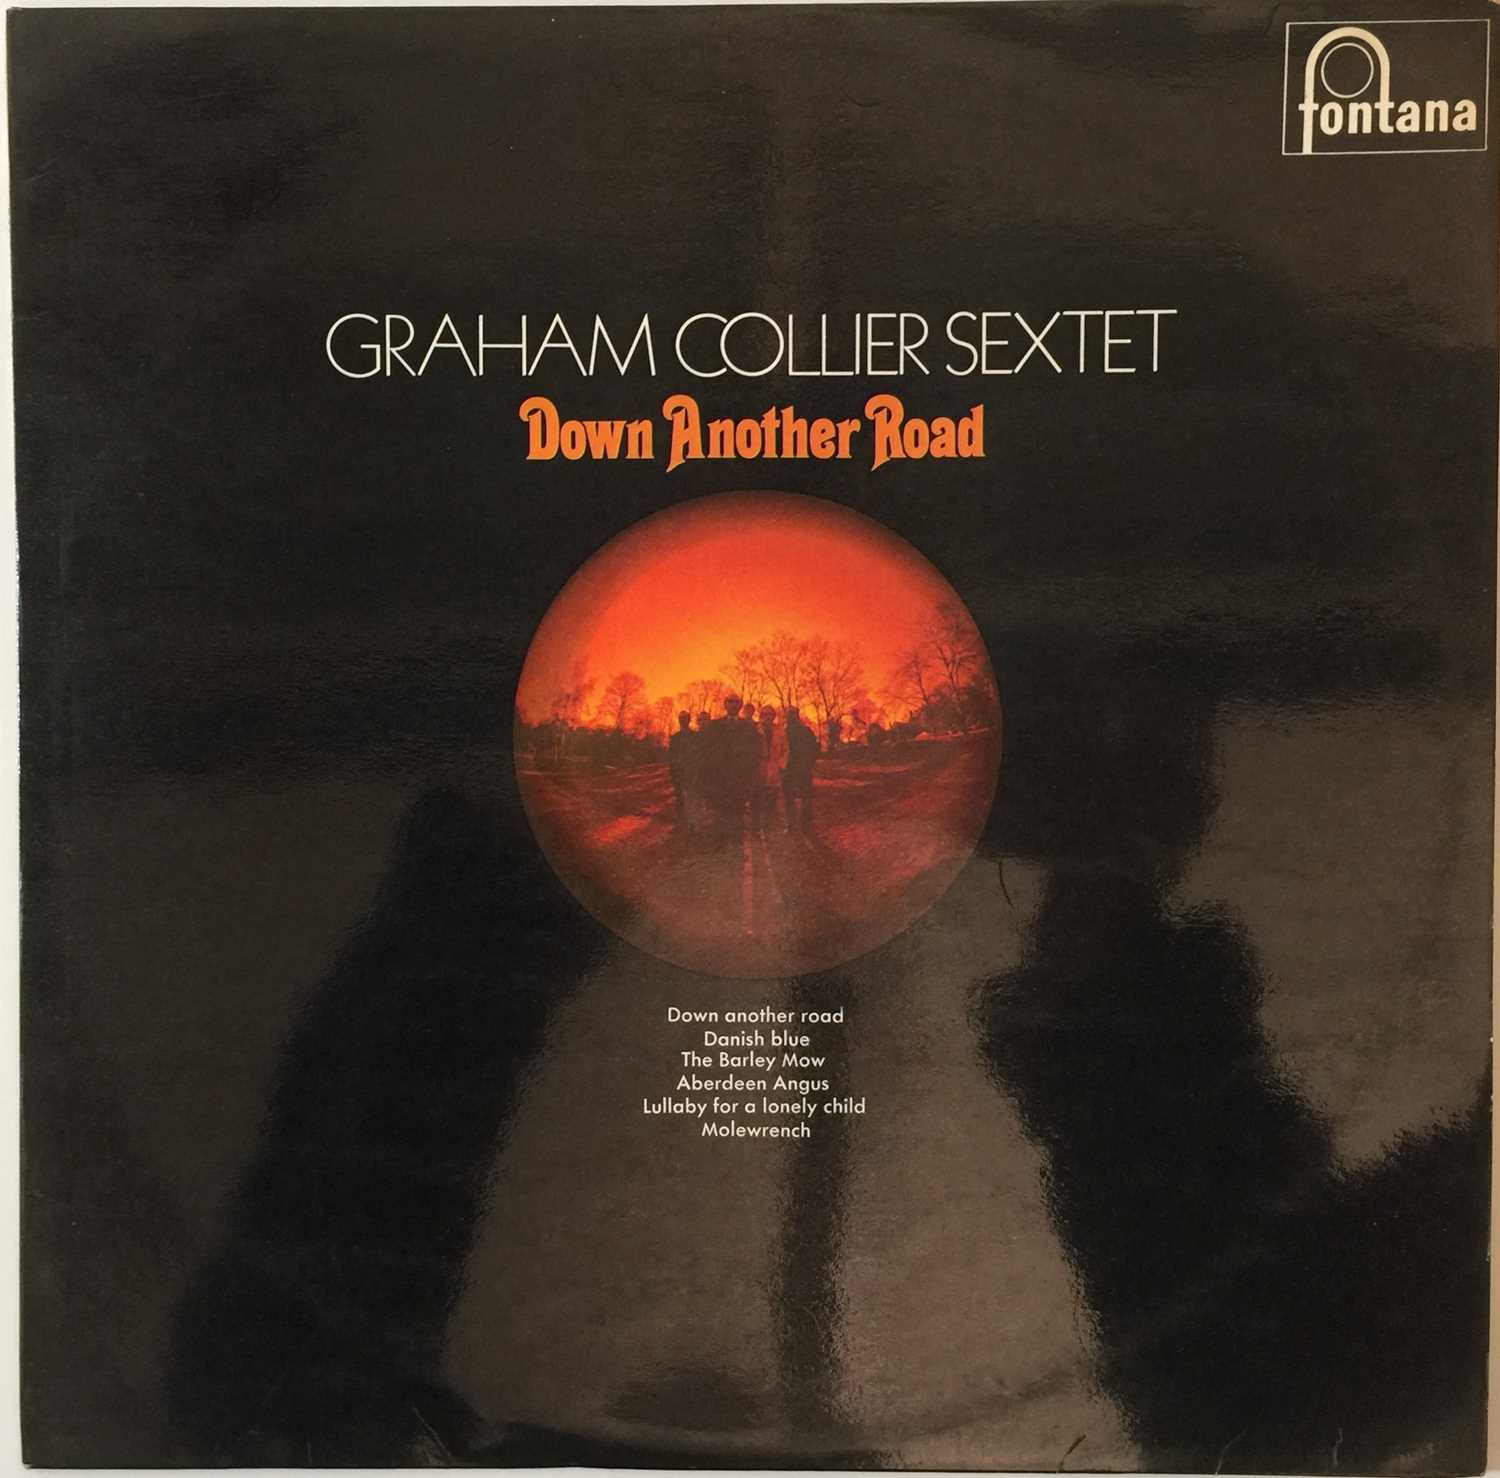 Graham Collier Sextet - Down Another Road LP (Original UK Release - Fontana SFJL 922)